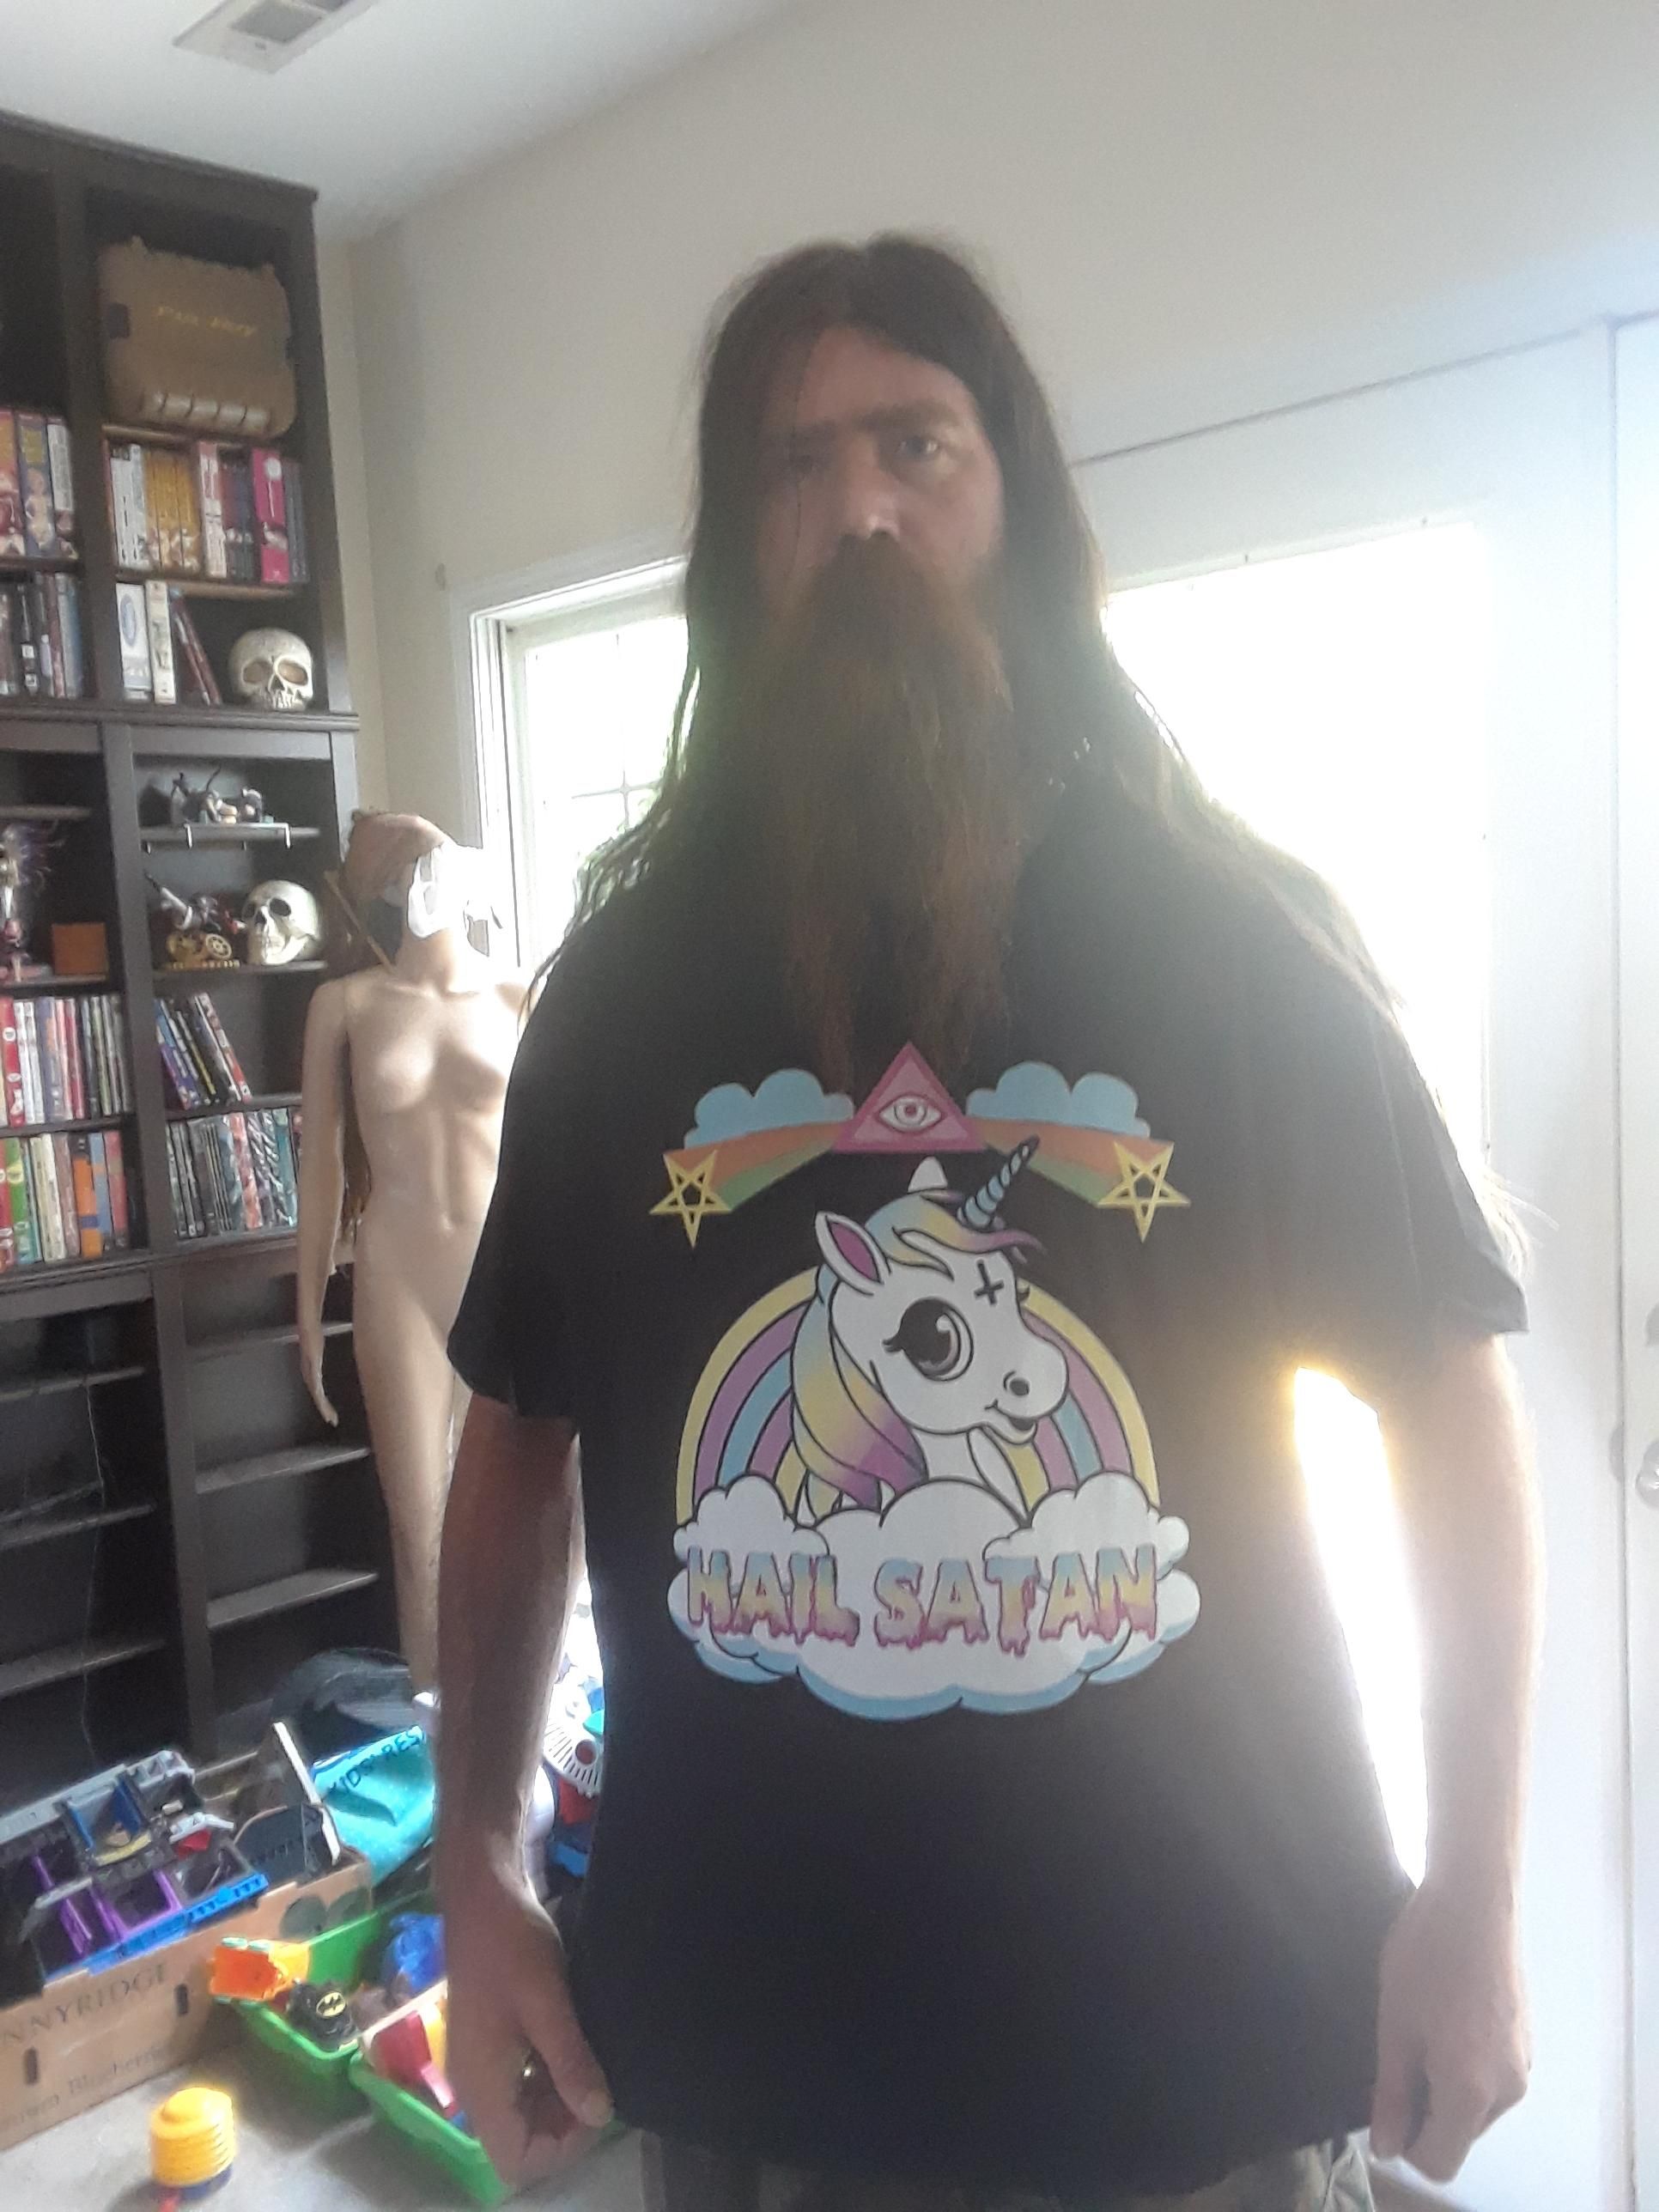 My Viking friend's new shirt.